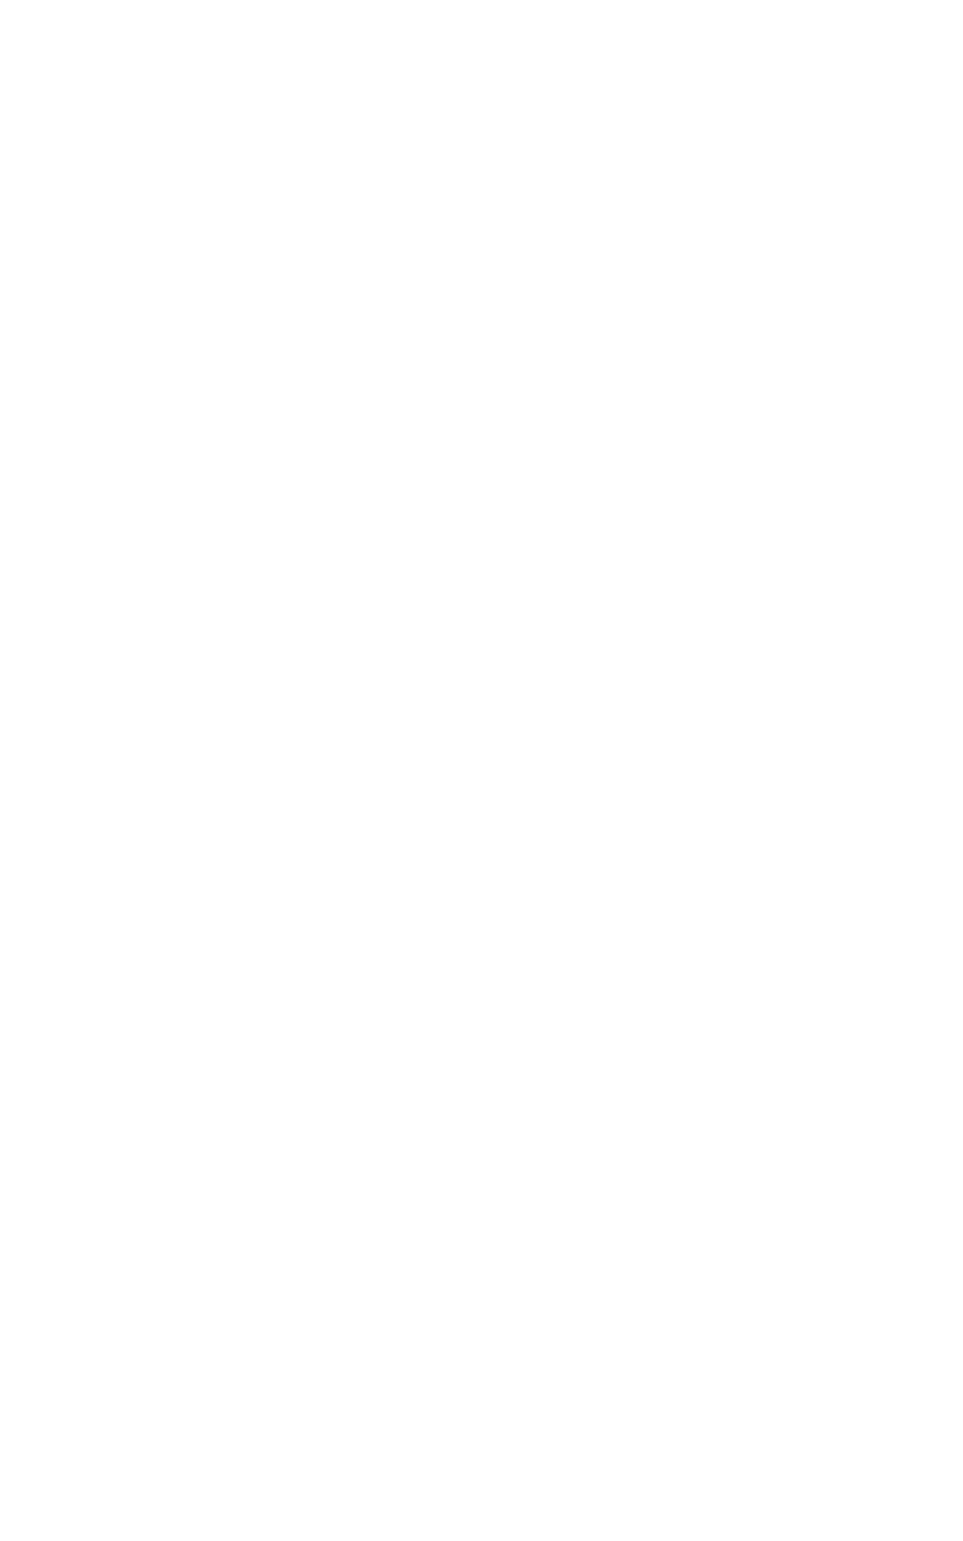 Strathcona Resources logo for dark backgrounds (transparent PNG)